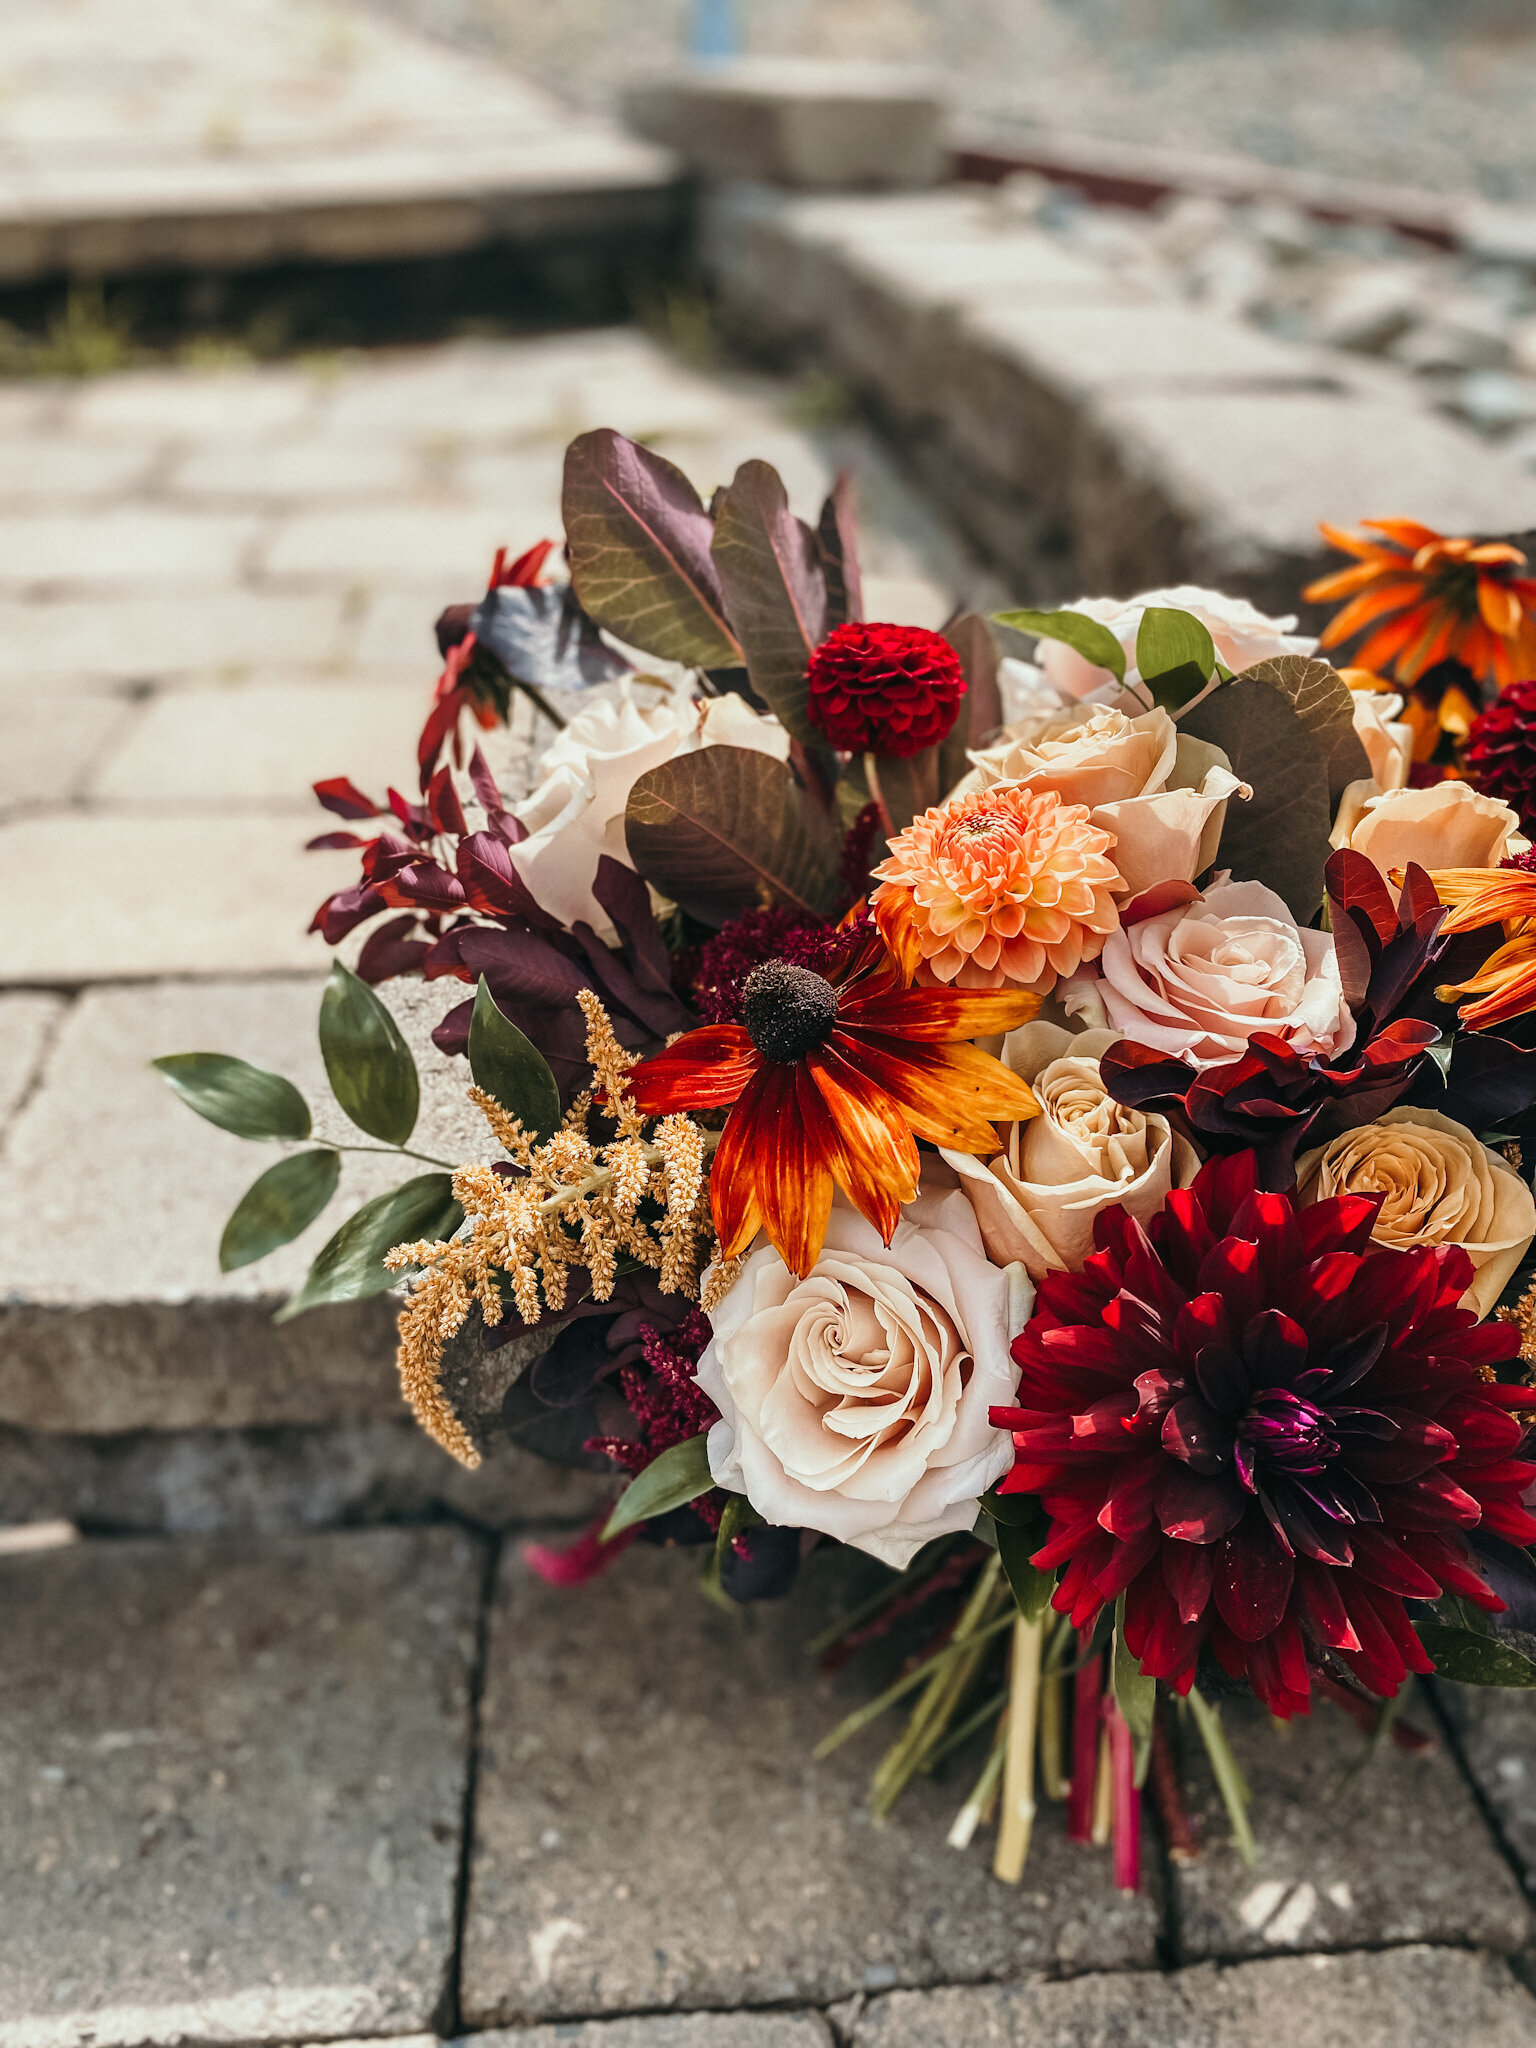 This bridal bouquet holds vivid colors with dahlias, rudbeckia, smoke bush and roses.